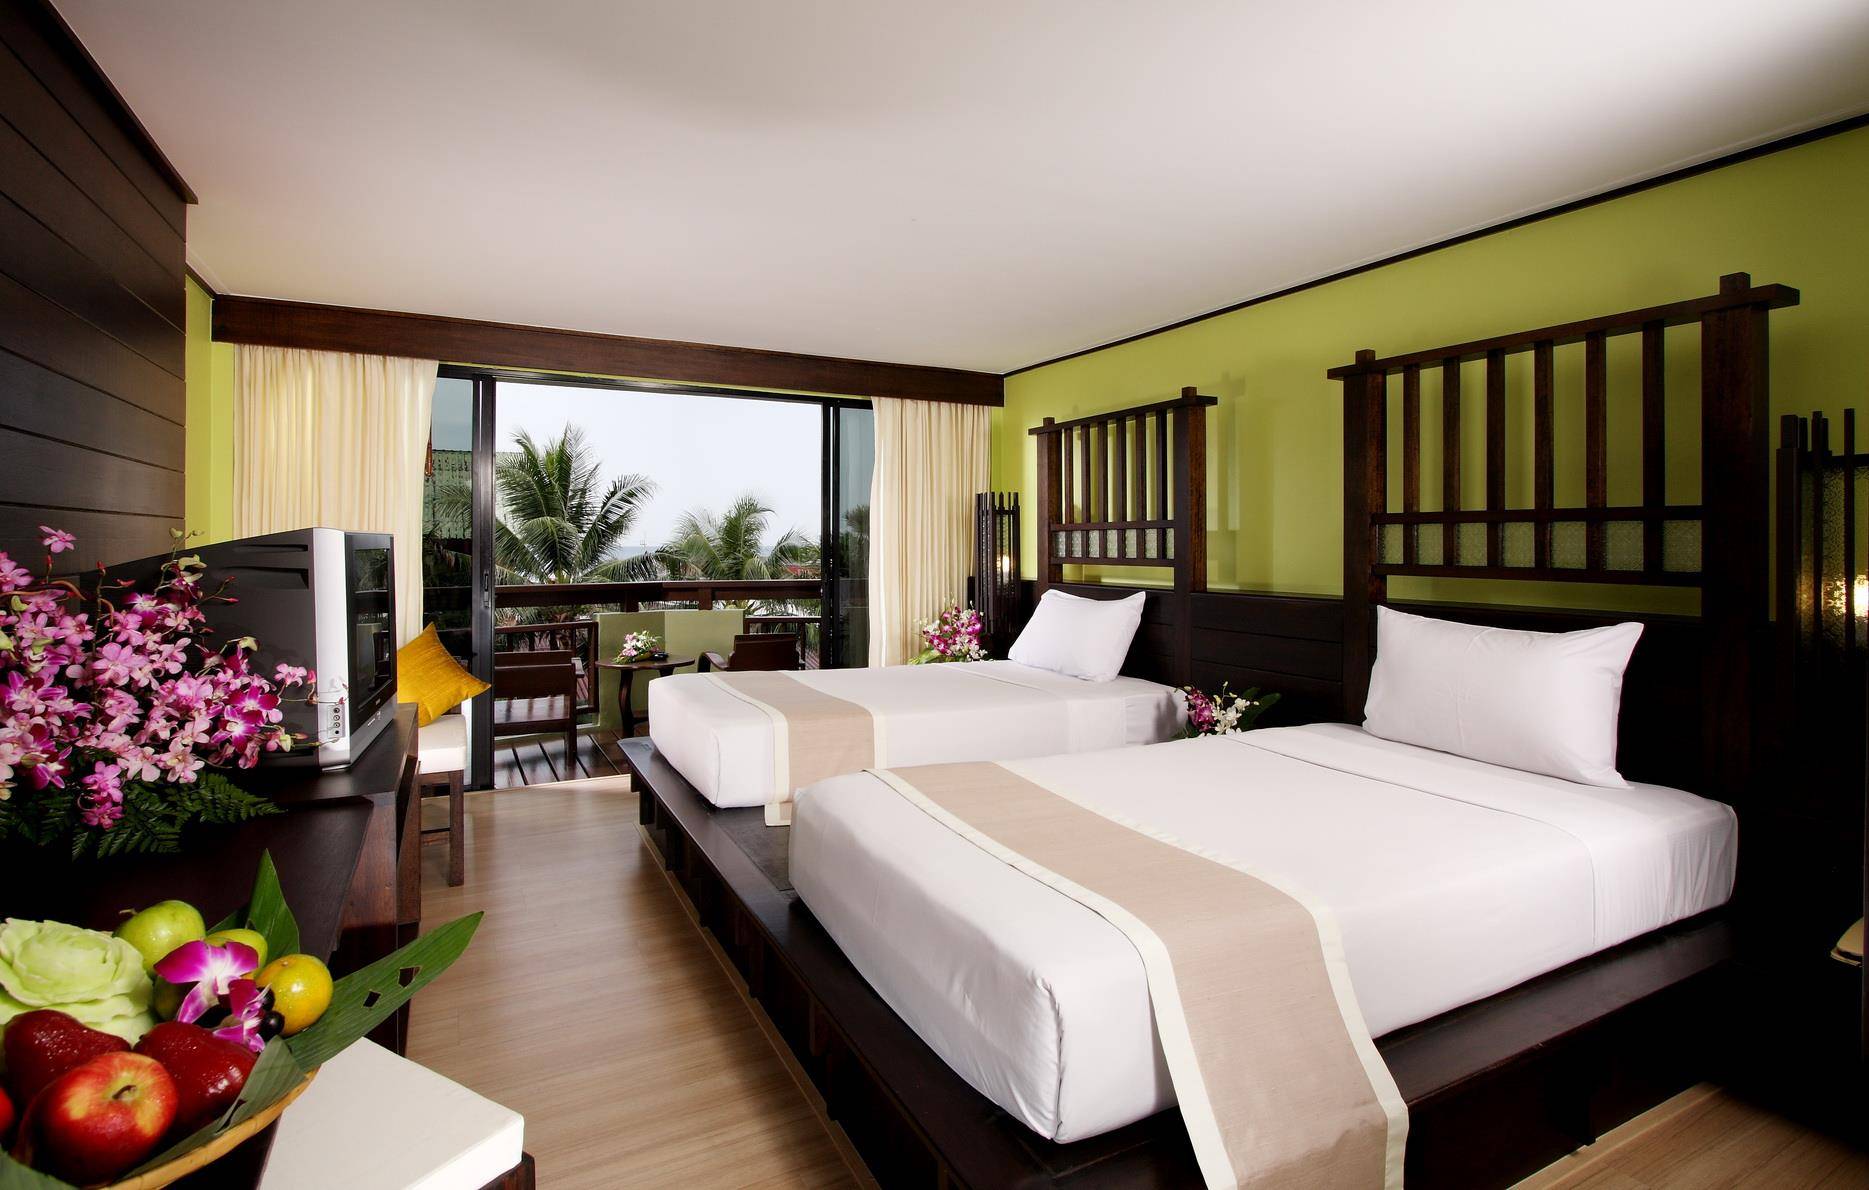 Гостиница viet sky hotel в нячанге, вьетнам  — яндекс путешествия